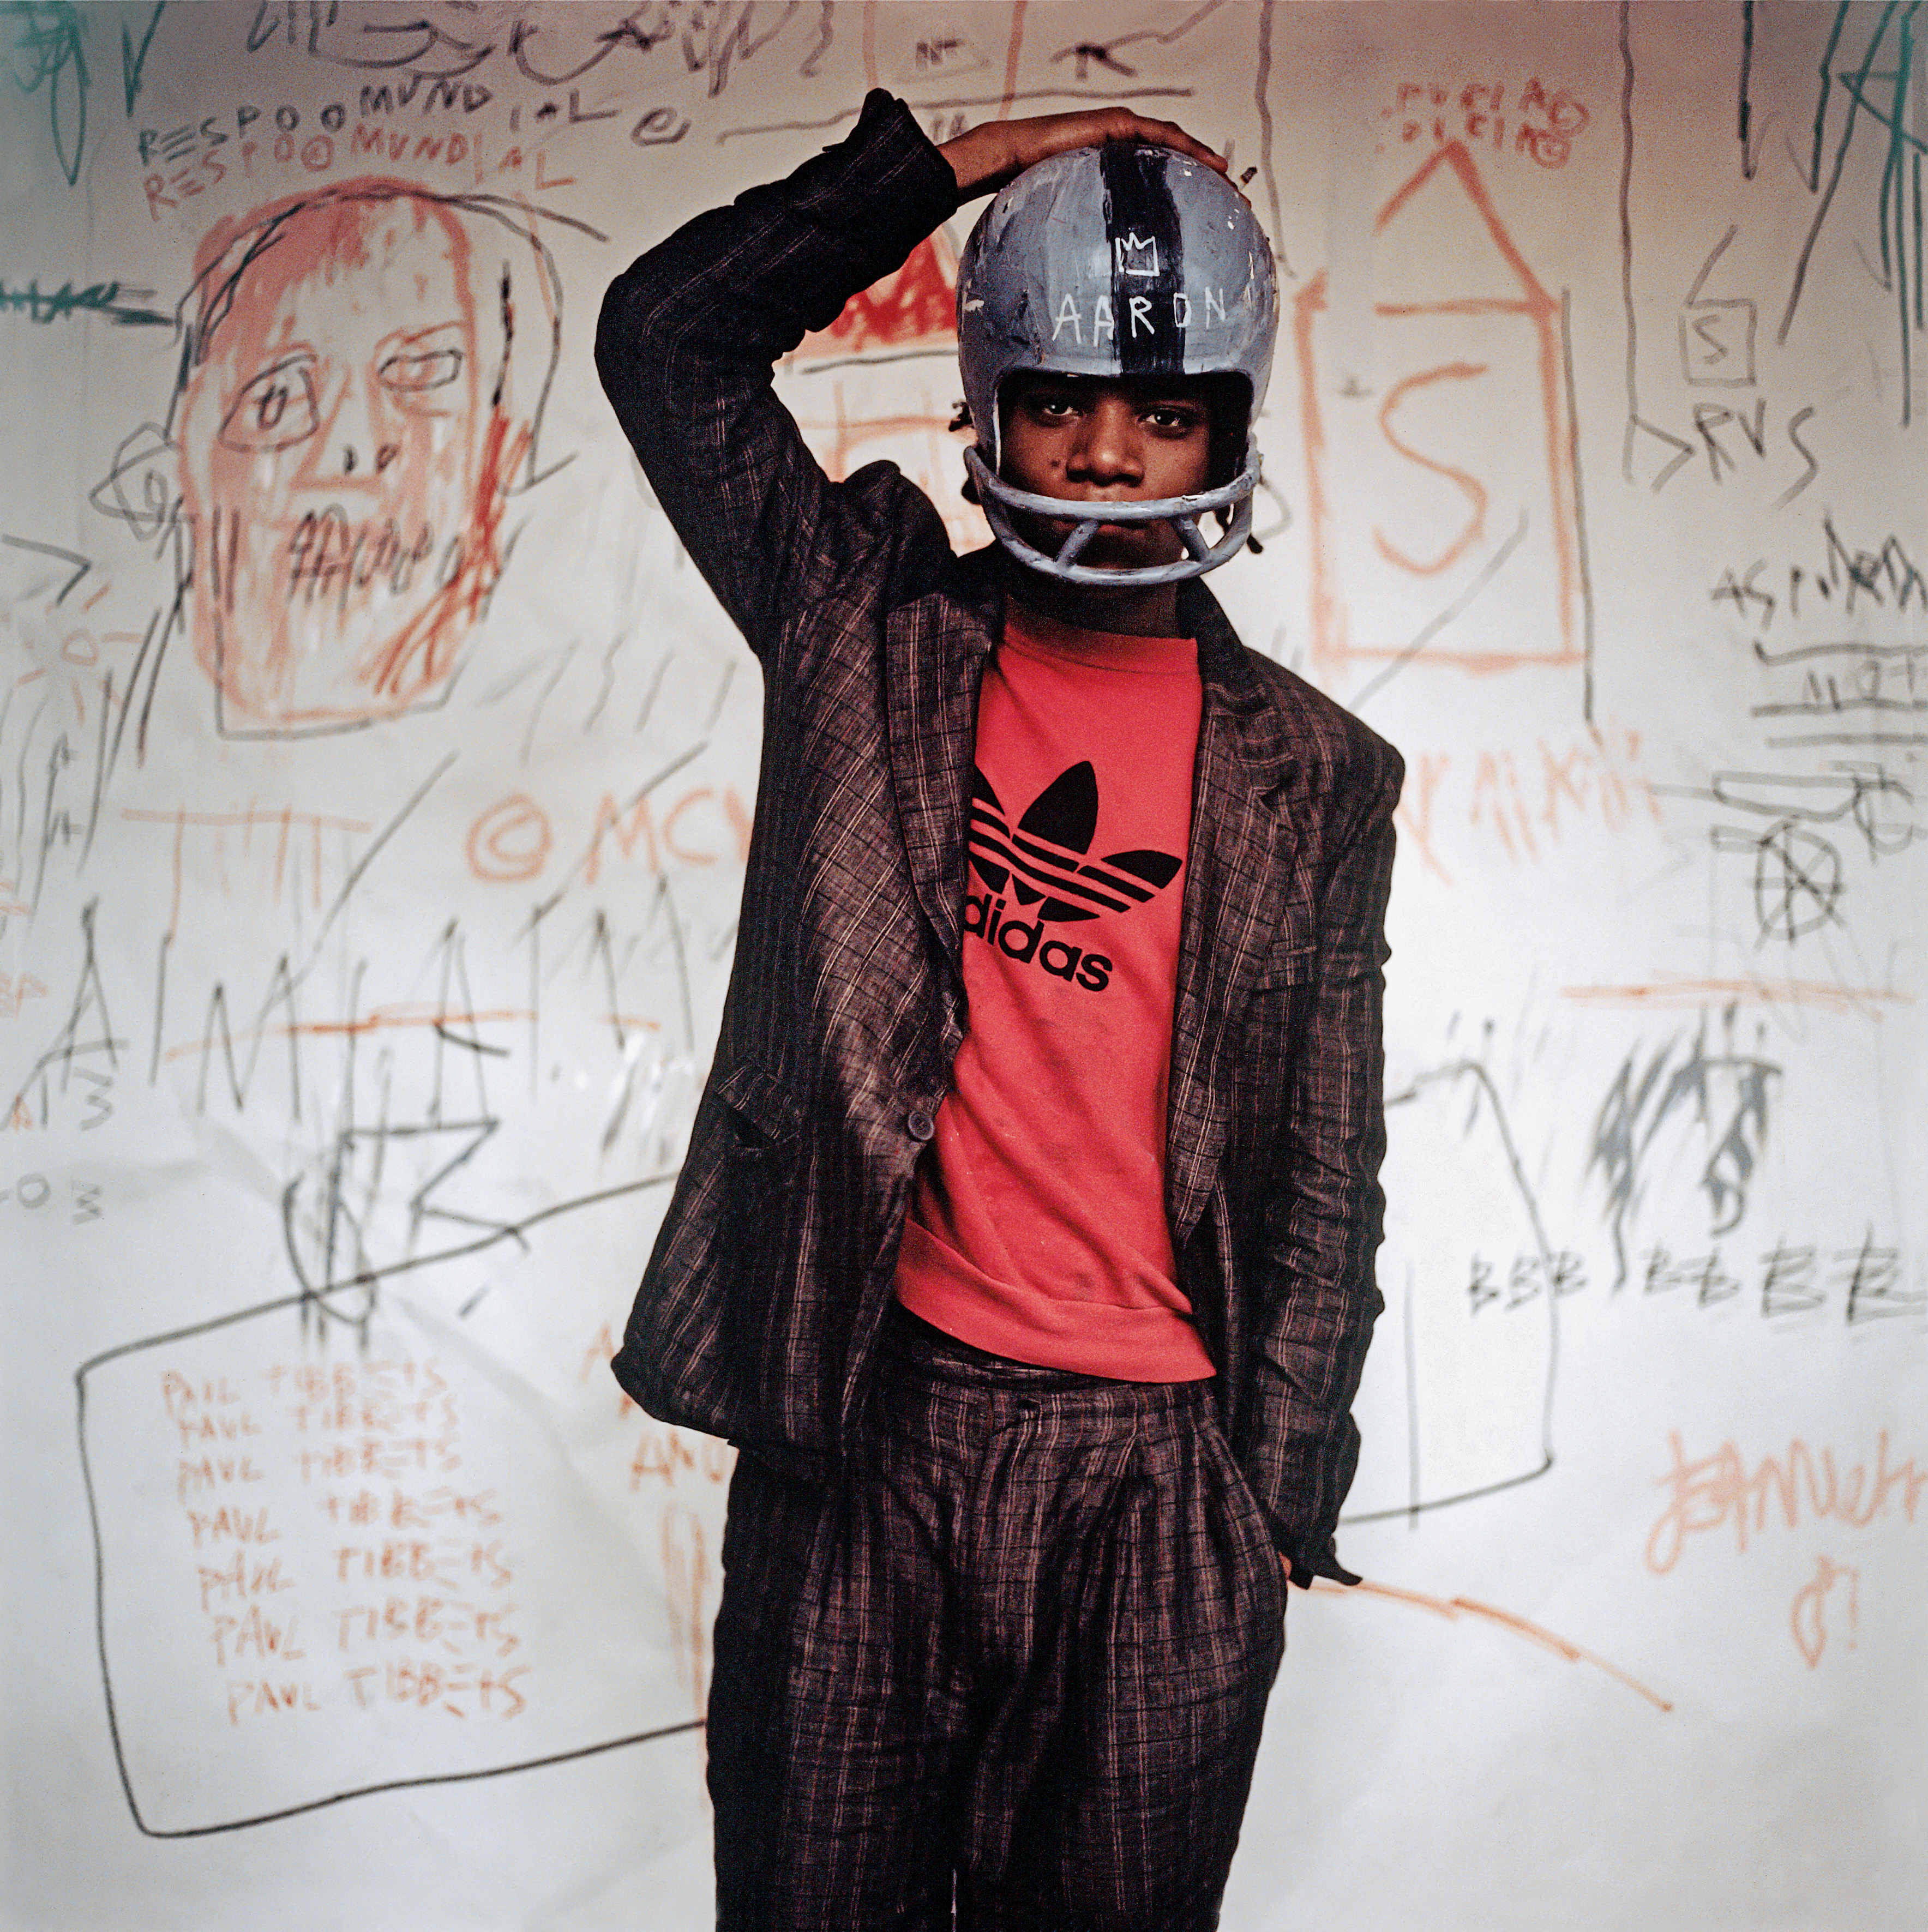 Schirn_Presse_Basquiat_Jean- Michel_Basquiat_wearing_an_American_football_helmet_1981.jpg Edo Bertoglio, Jean-Michel Basquiat wearing an American football helmet, 1981, Photo: © Edo Bertoglio, courtesy of Maripol, Artwork: © VG Bild-Kunst Bonn, 2018 & The Estate of Jean-Michel Basquiat, Licensed by Artestar, New York